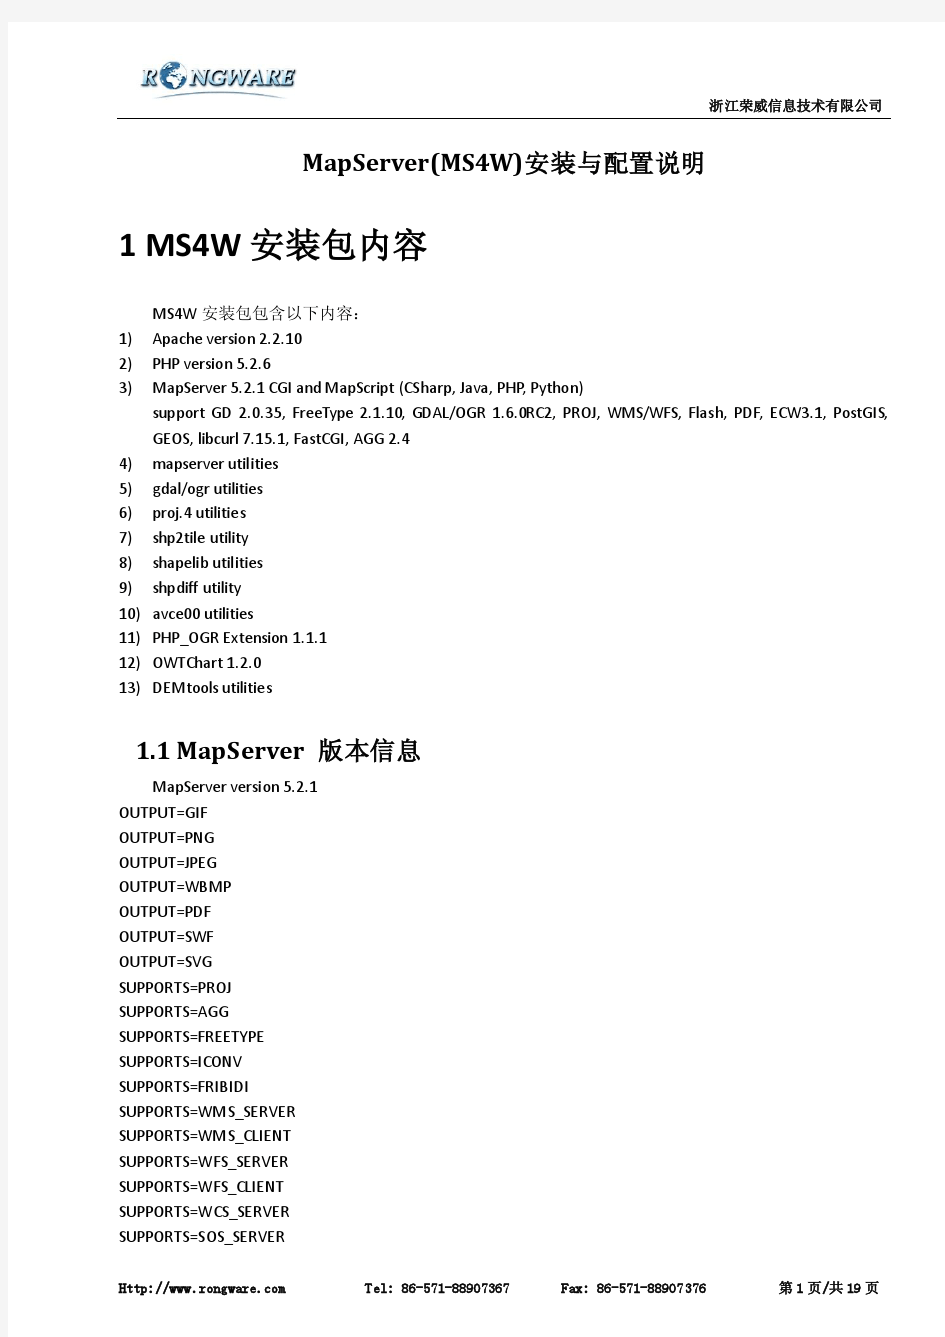 MS4W安装与配置说明